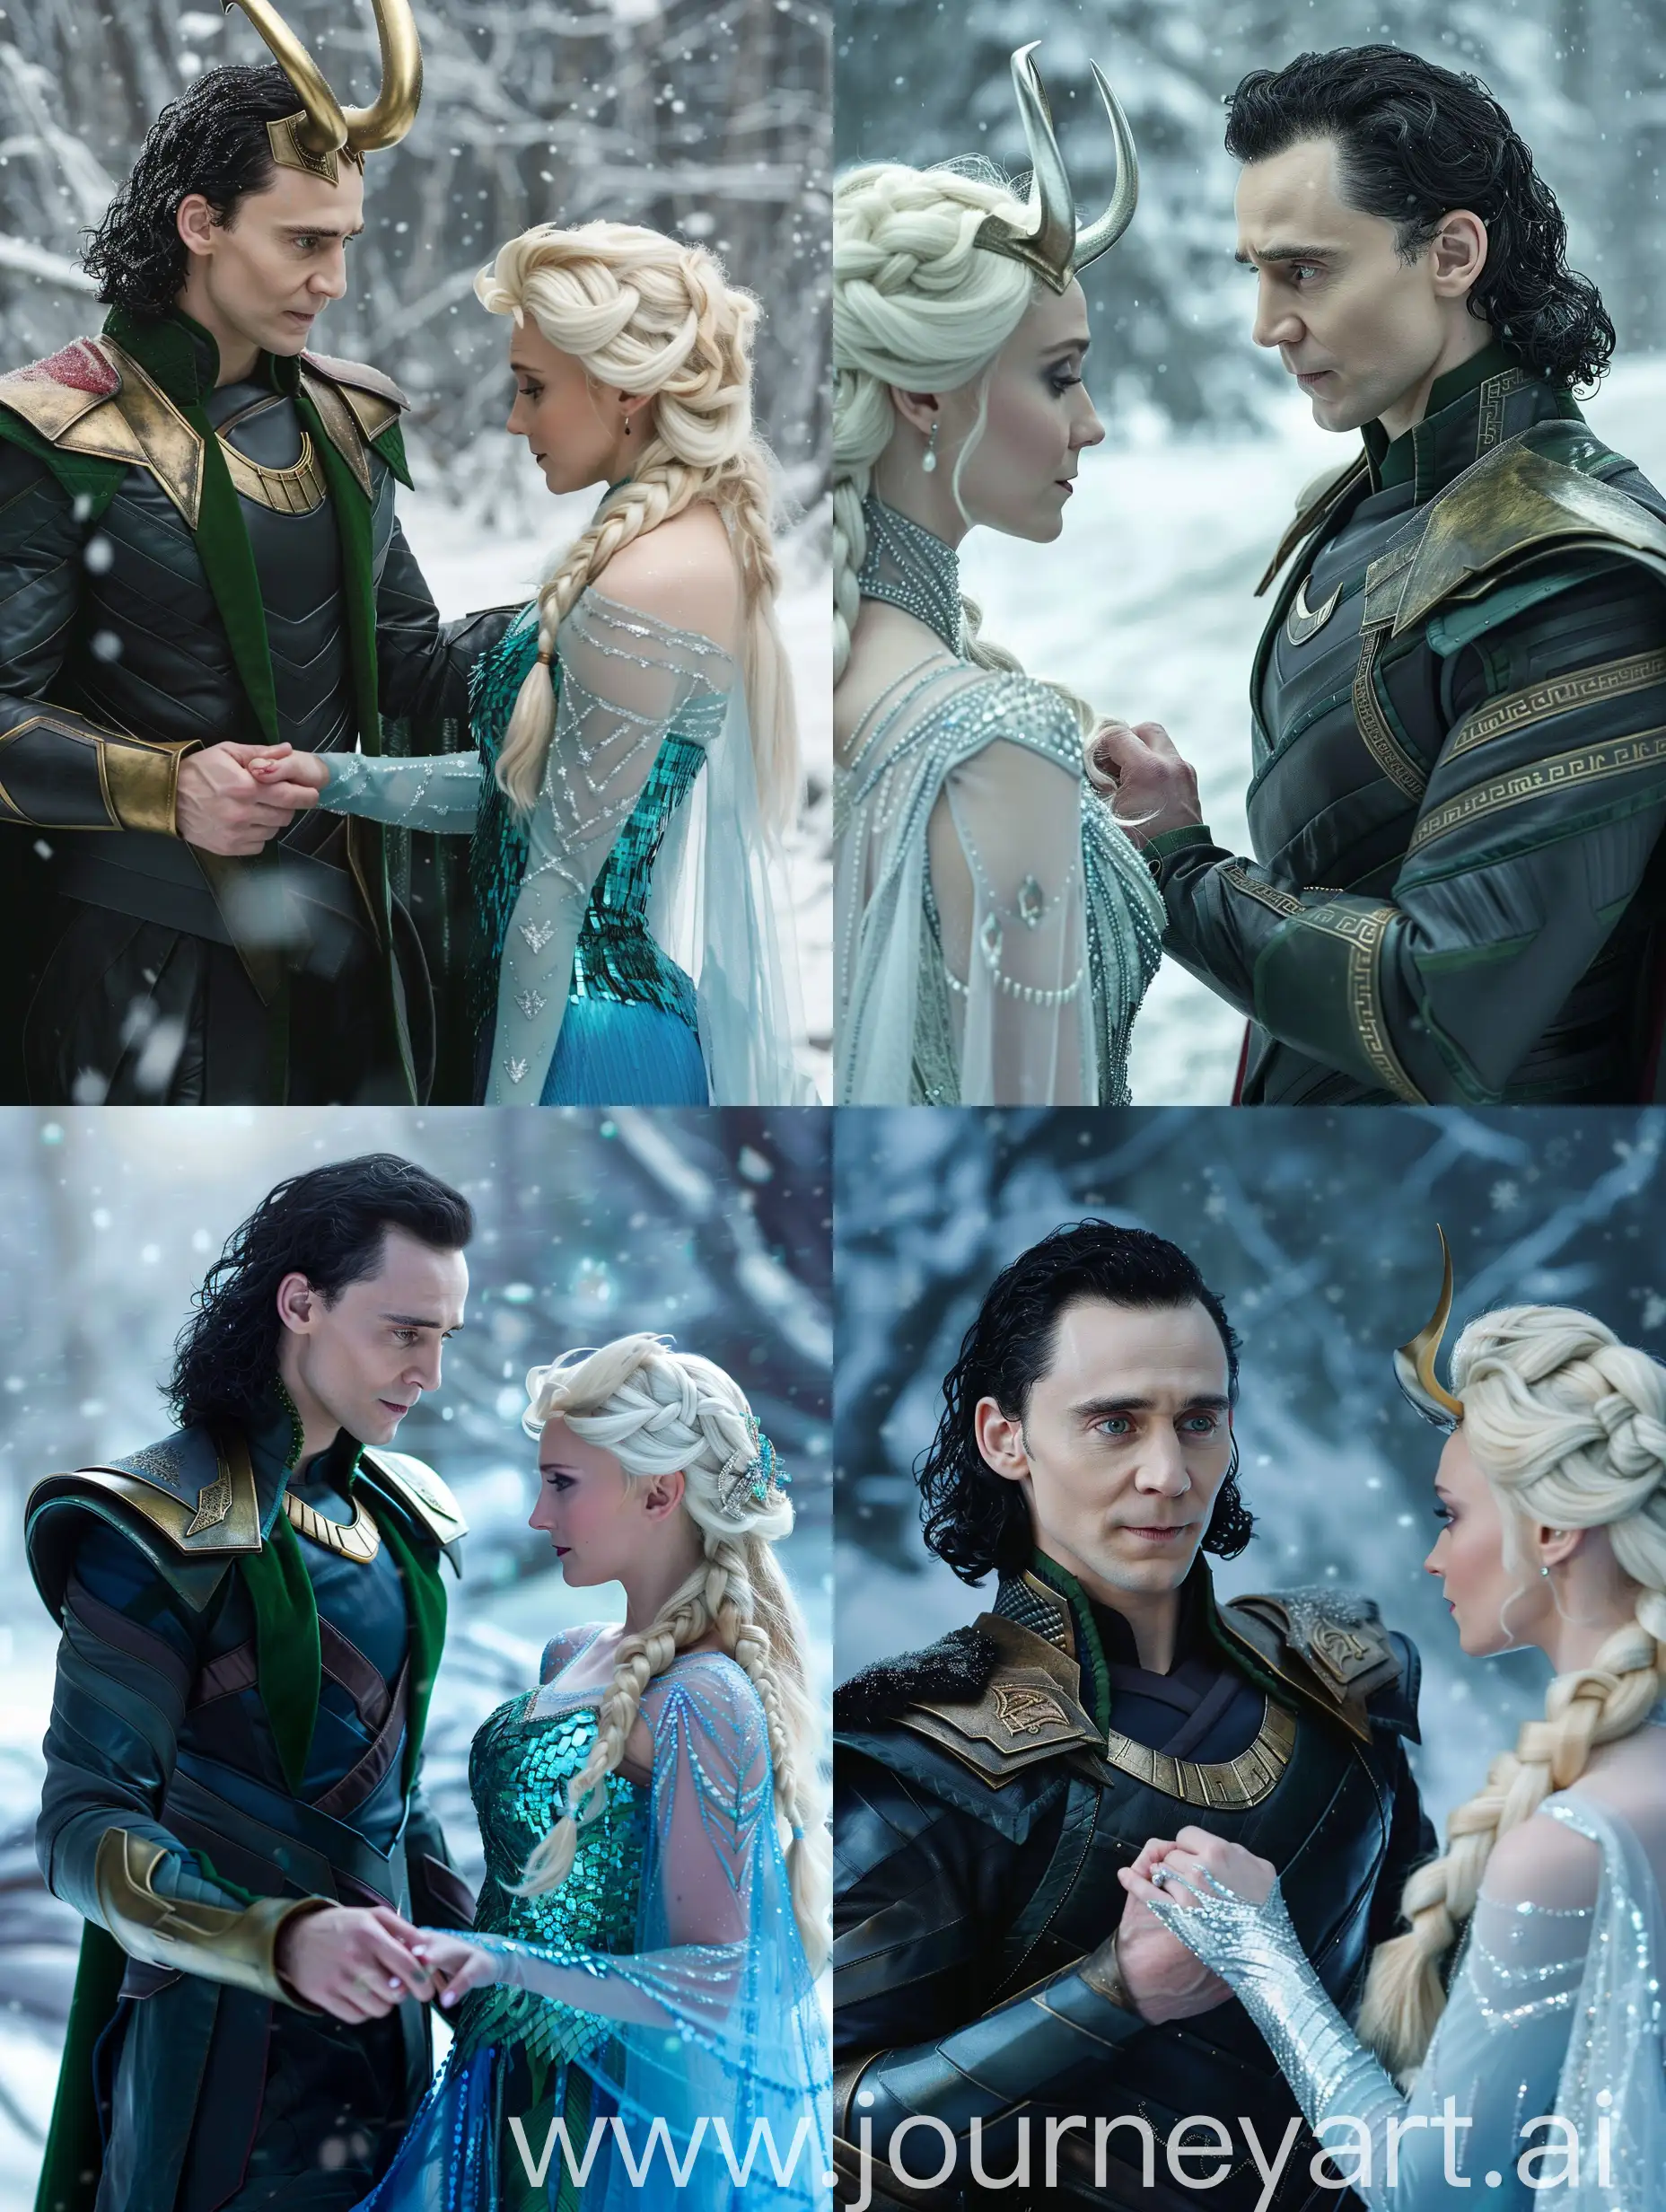 Tm Hiddleston as Loki romantically holding the hand of Elsa